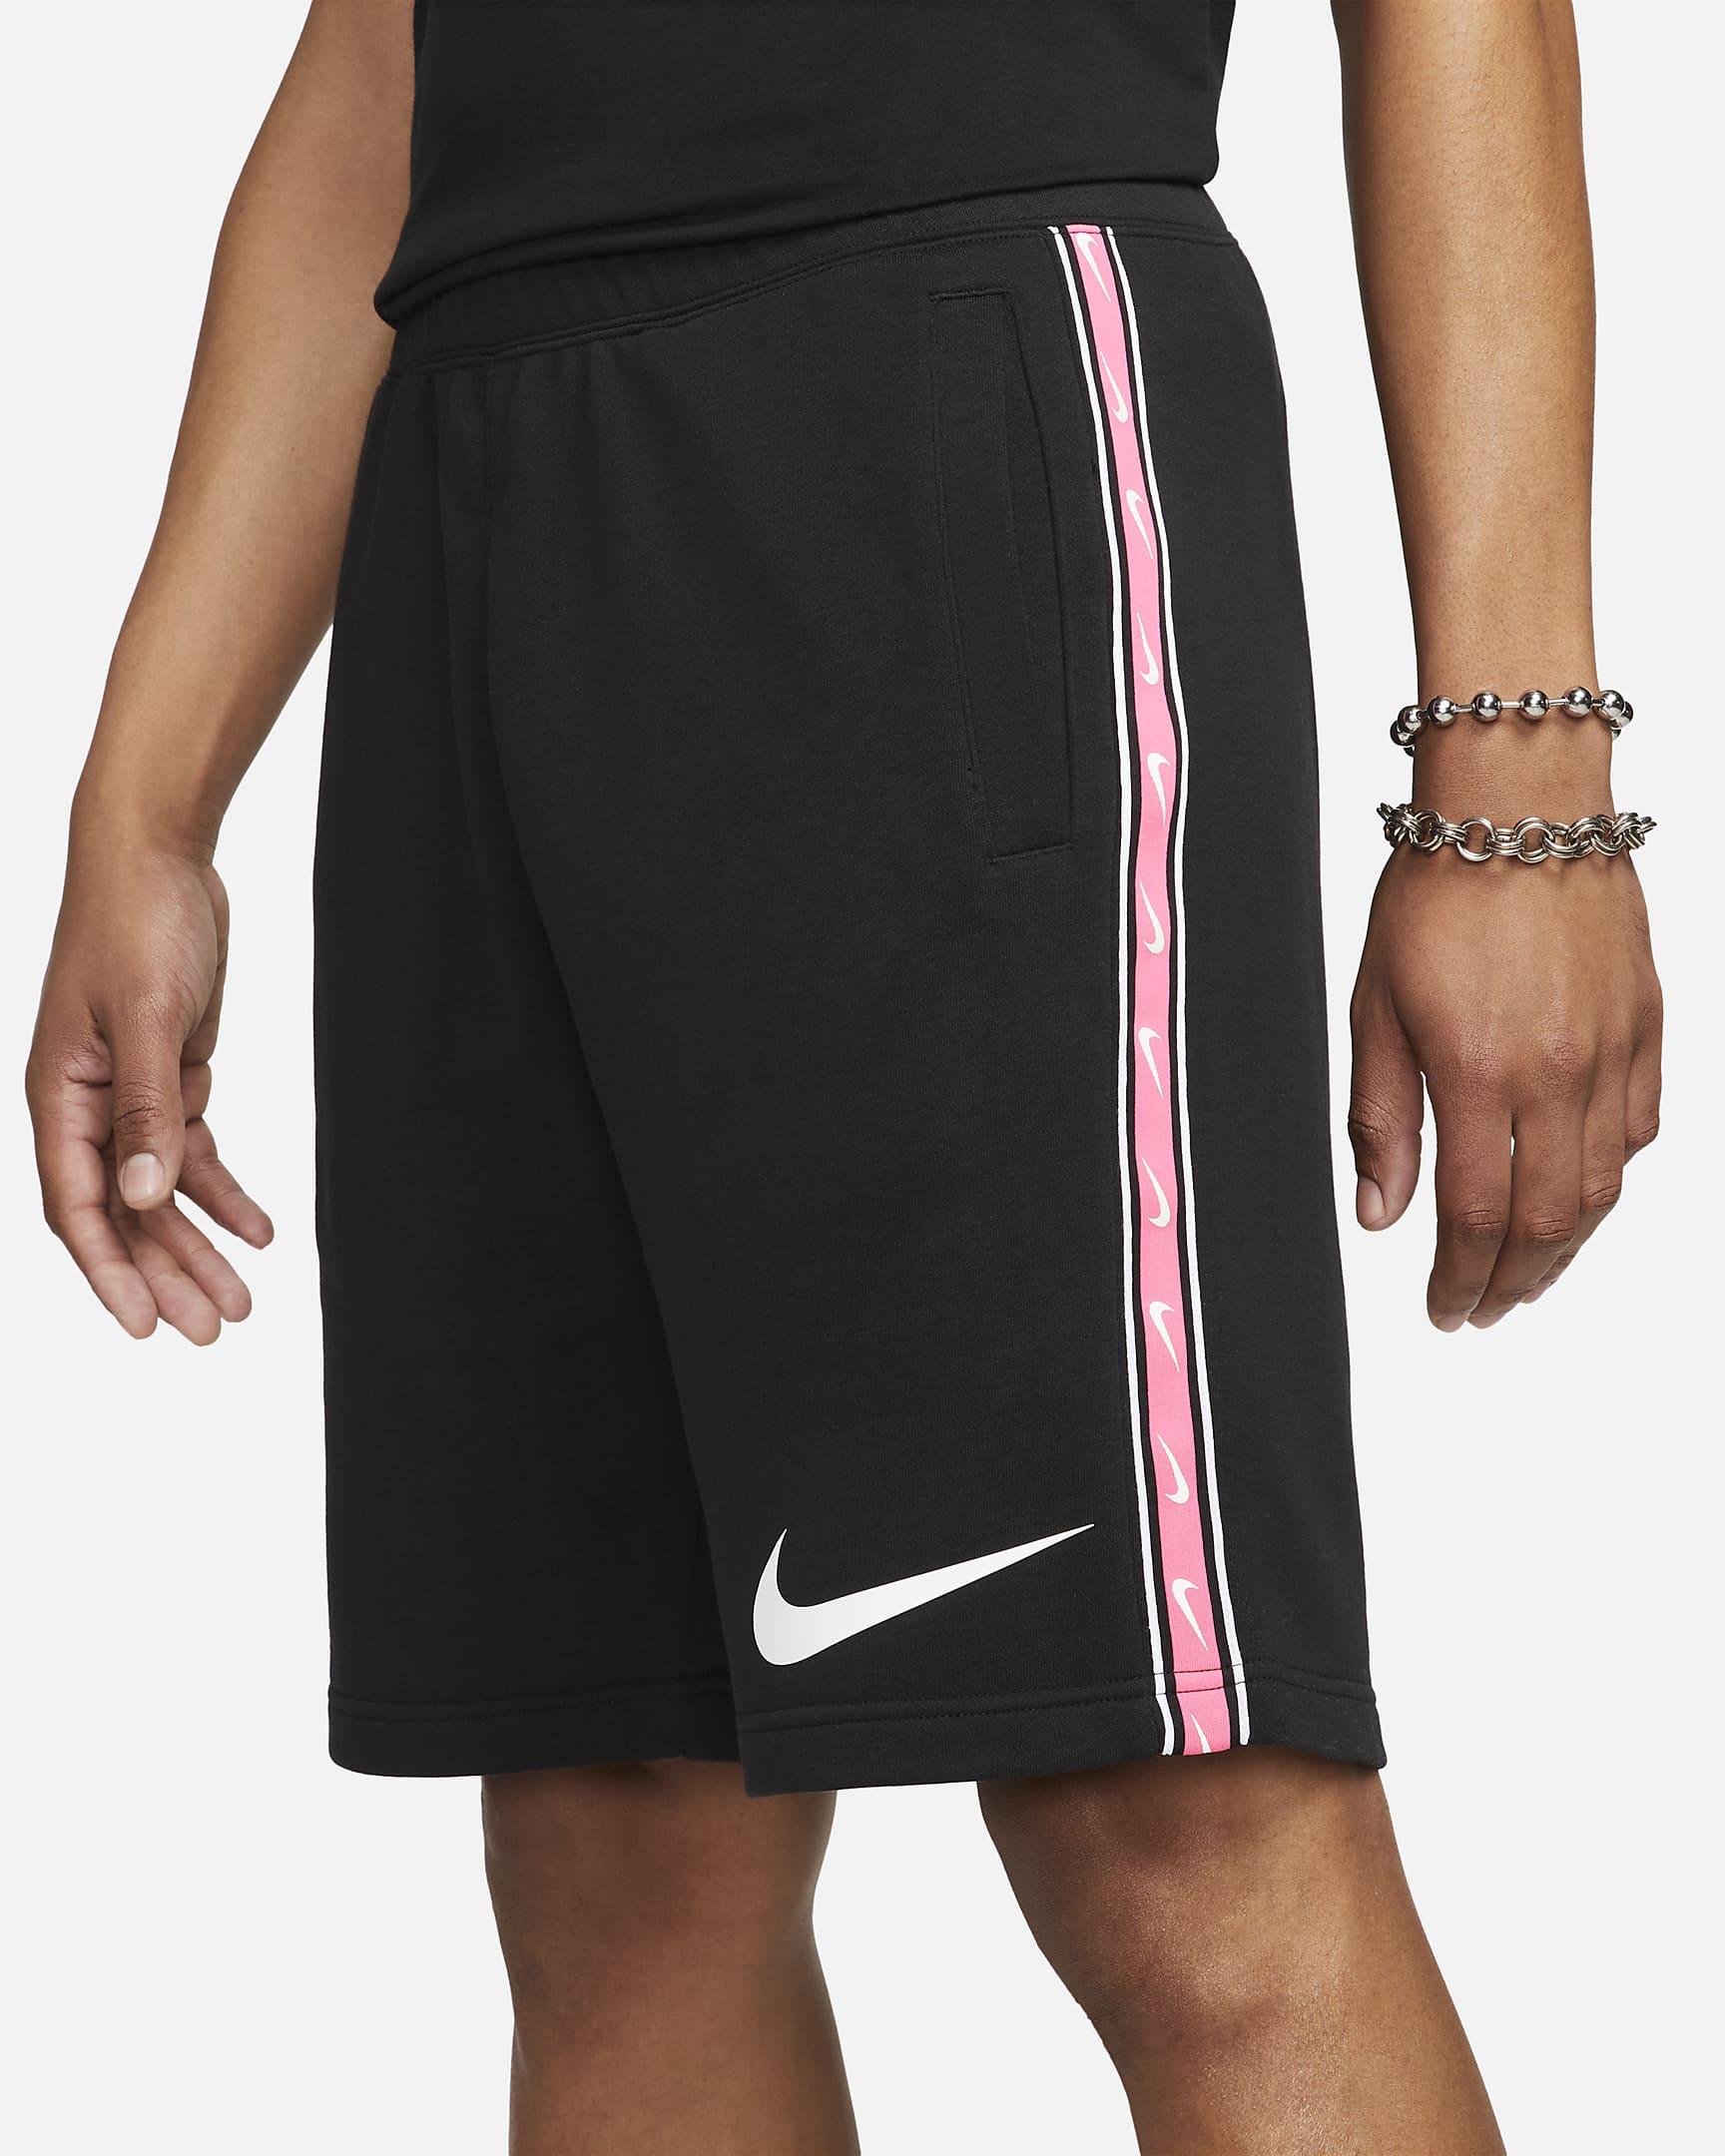 Pantaloncini Nike Sportswear - Nero/Bianco/Rosa